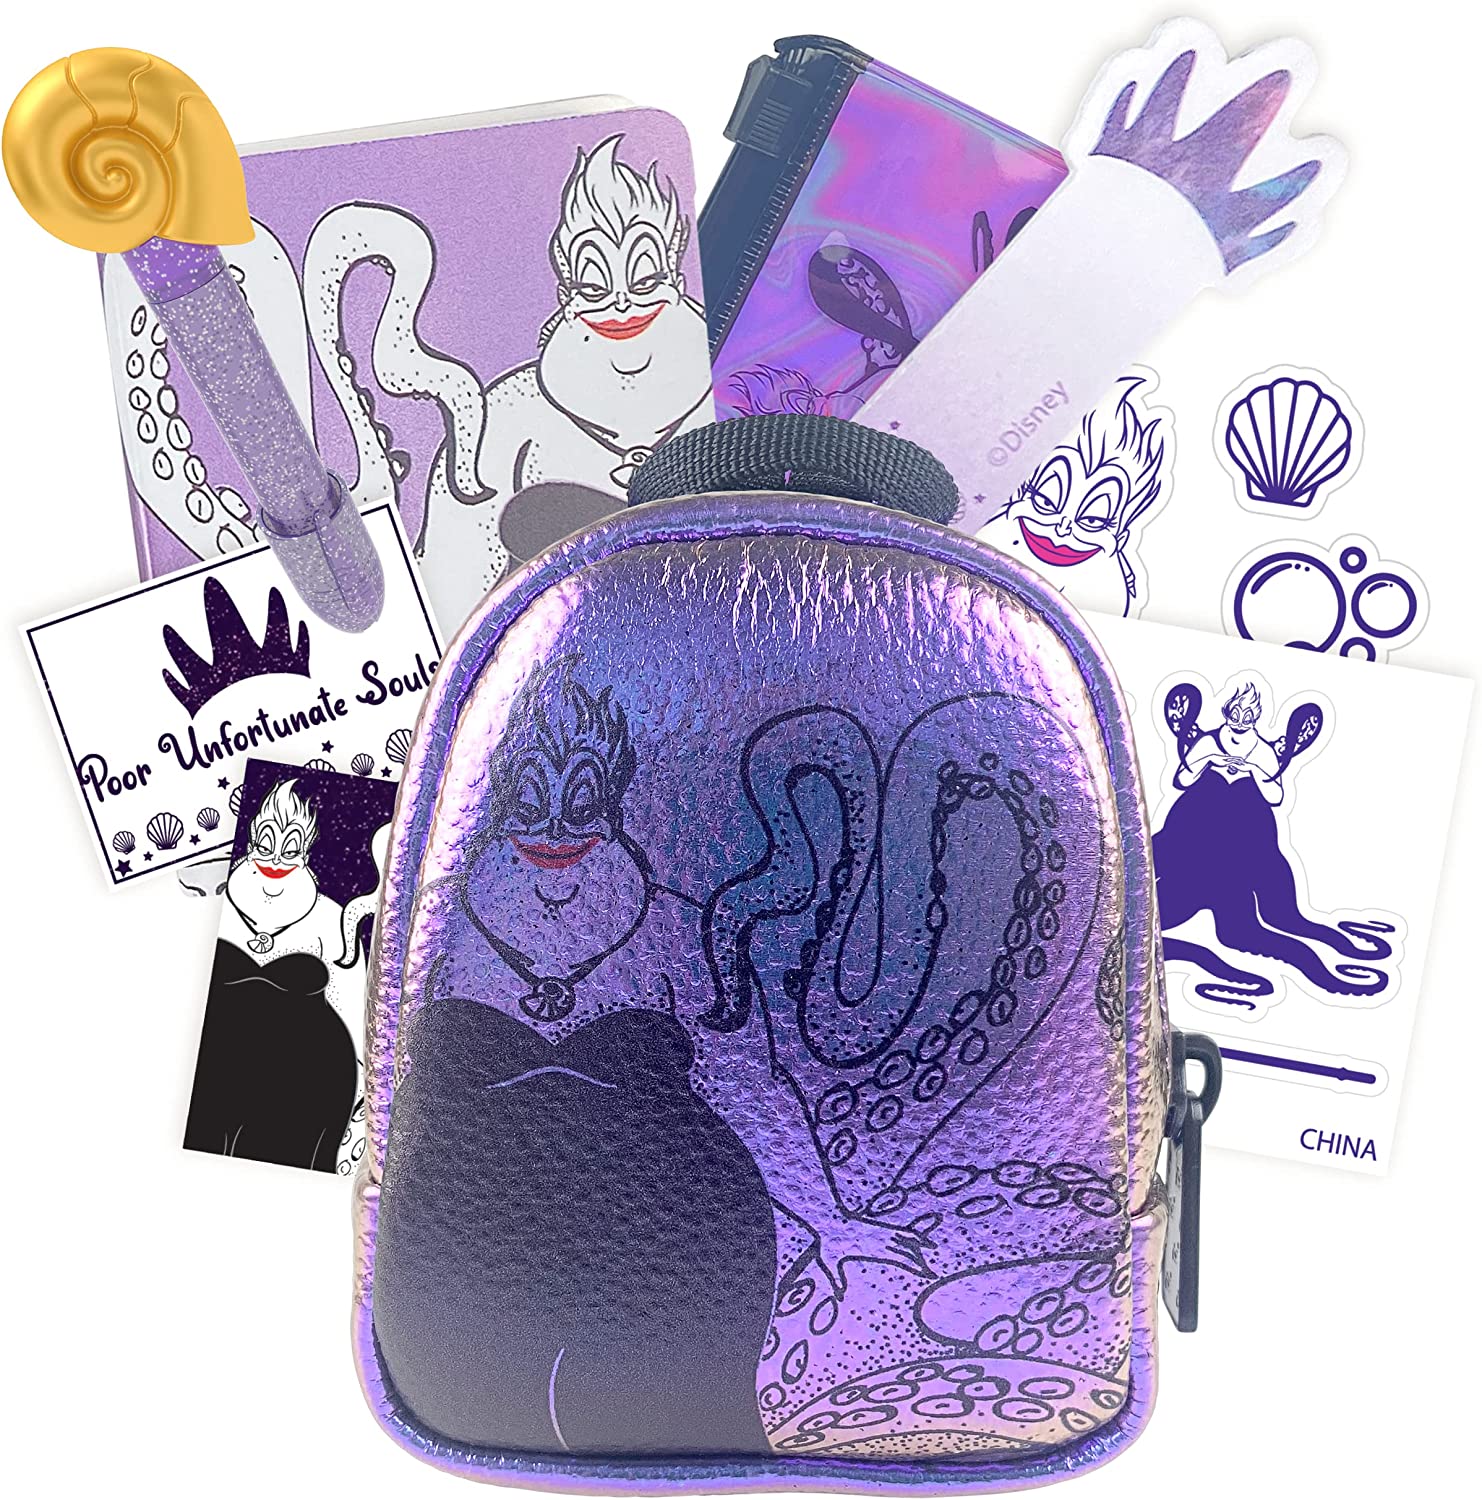 Real Littles Locker + Handbag Bundle Pack! Each Contains an Exclusive  Handbag